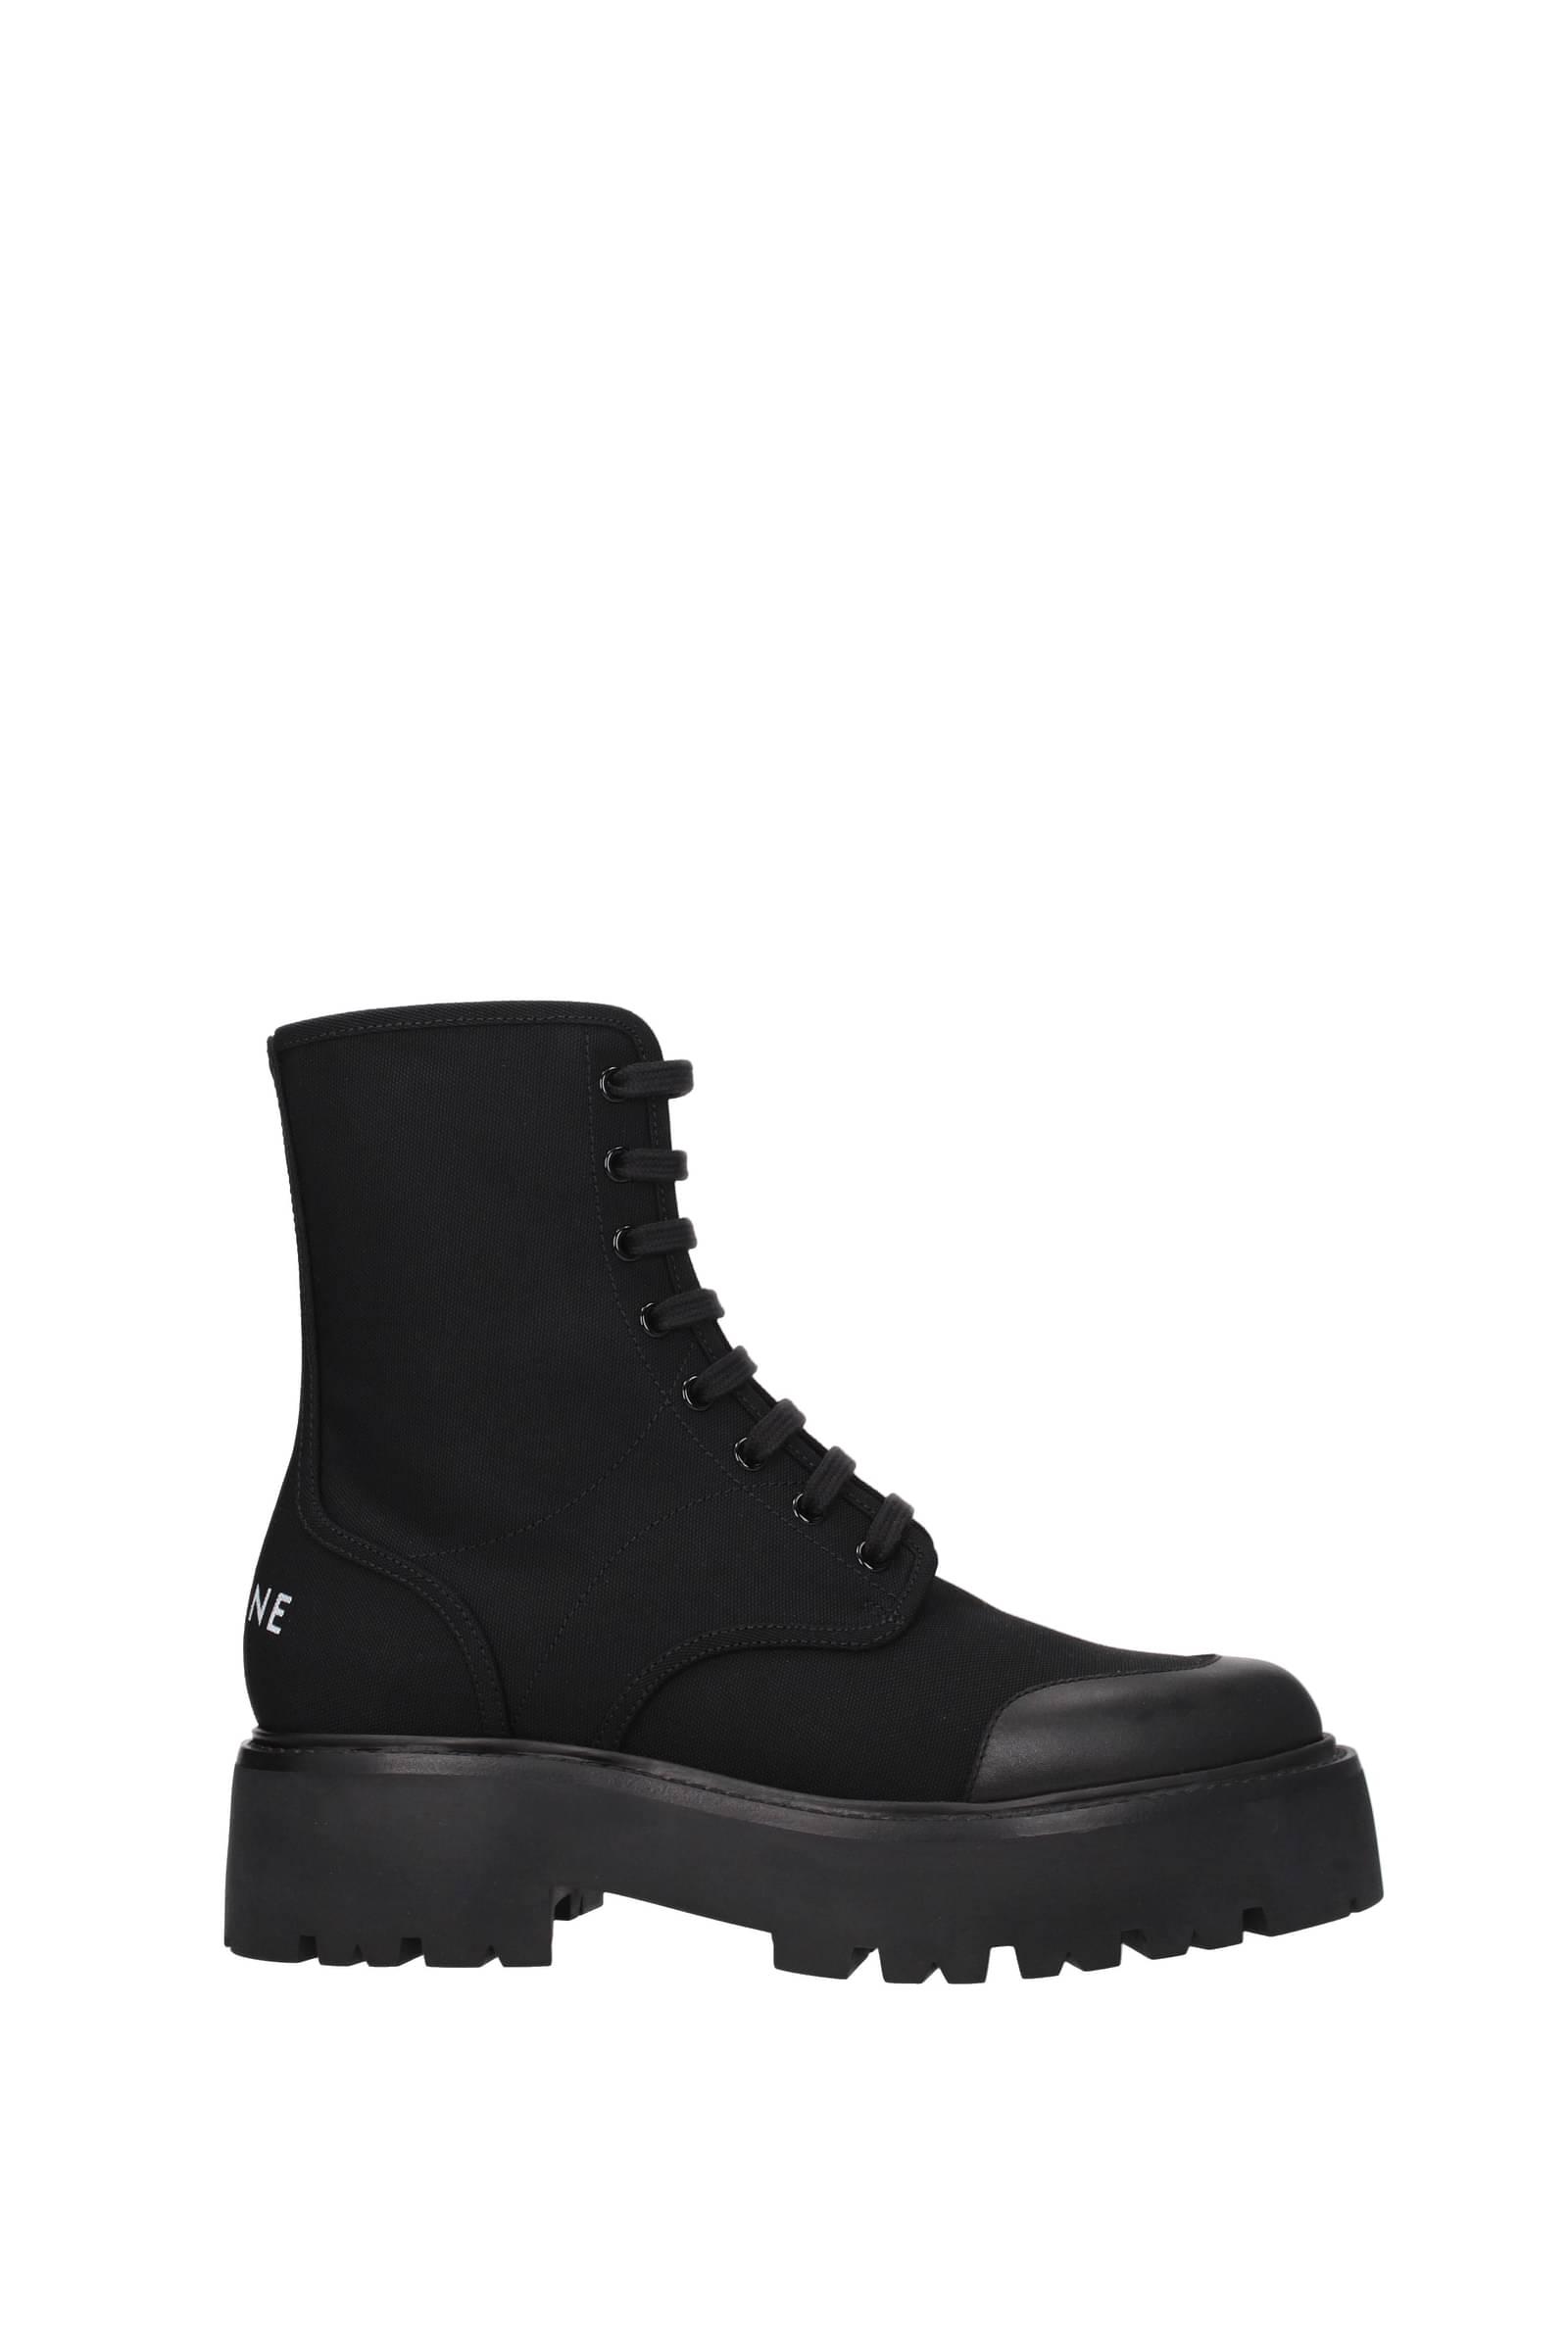 Celine Ankle Boot Fabric Black for Men | Lyst